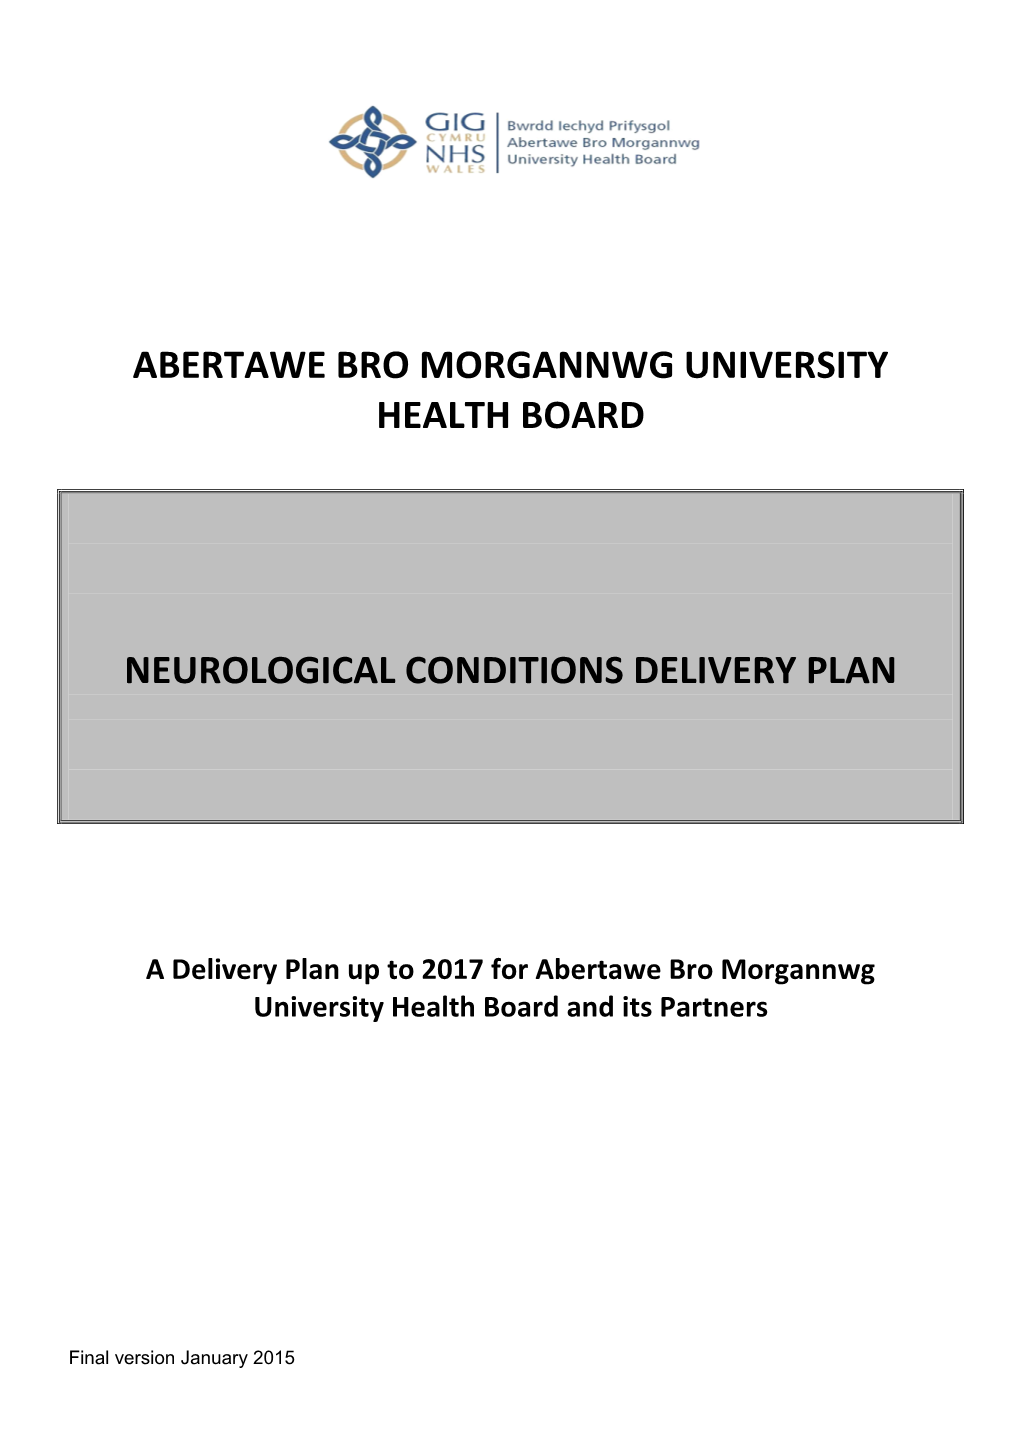 Abertawe Bro Morgannwg University Health Board Neurological Conditions Delivery Plan